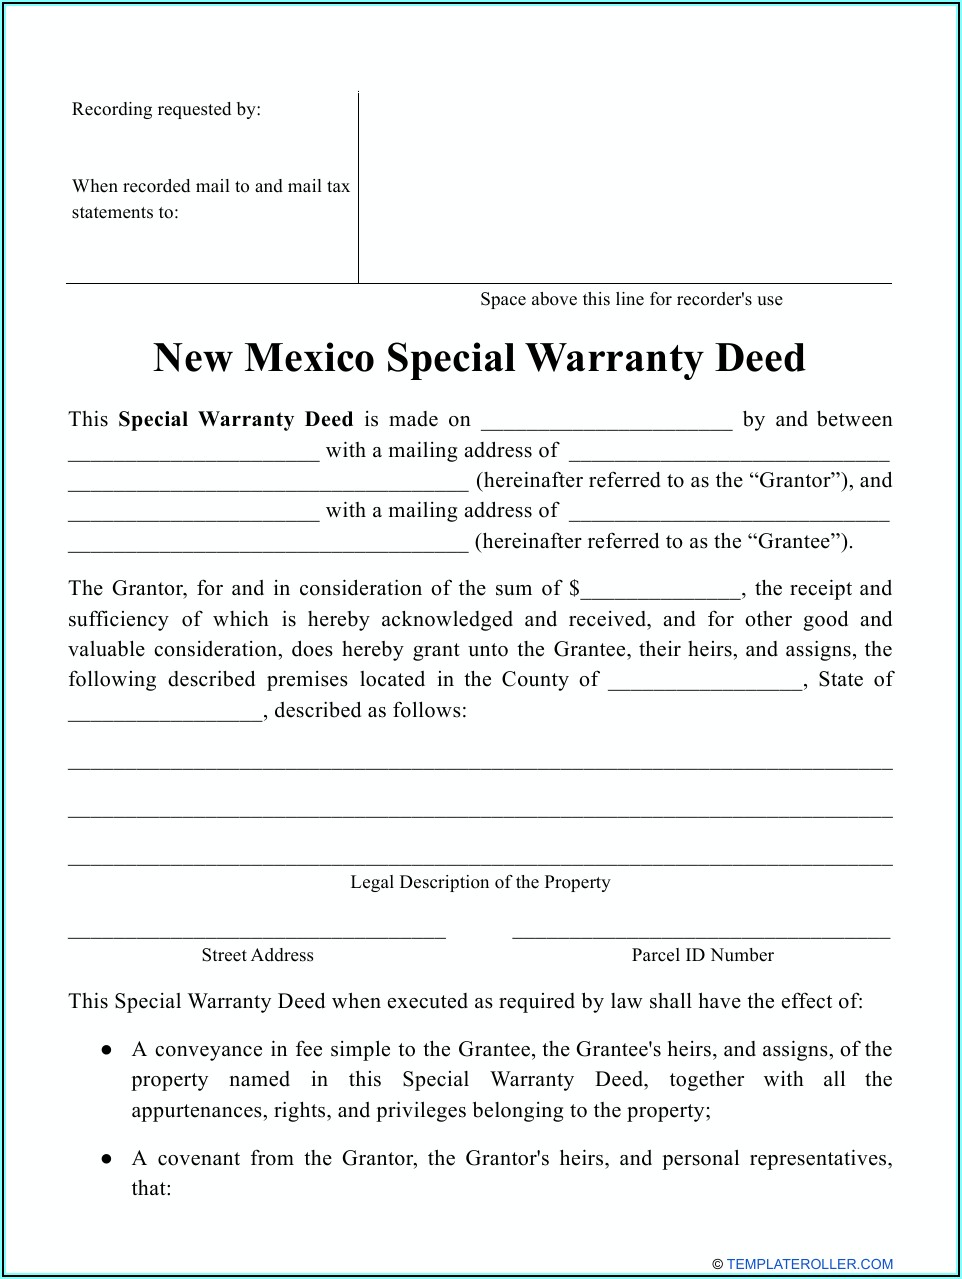 New Mexico Special Warranty Deed Form